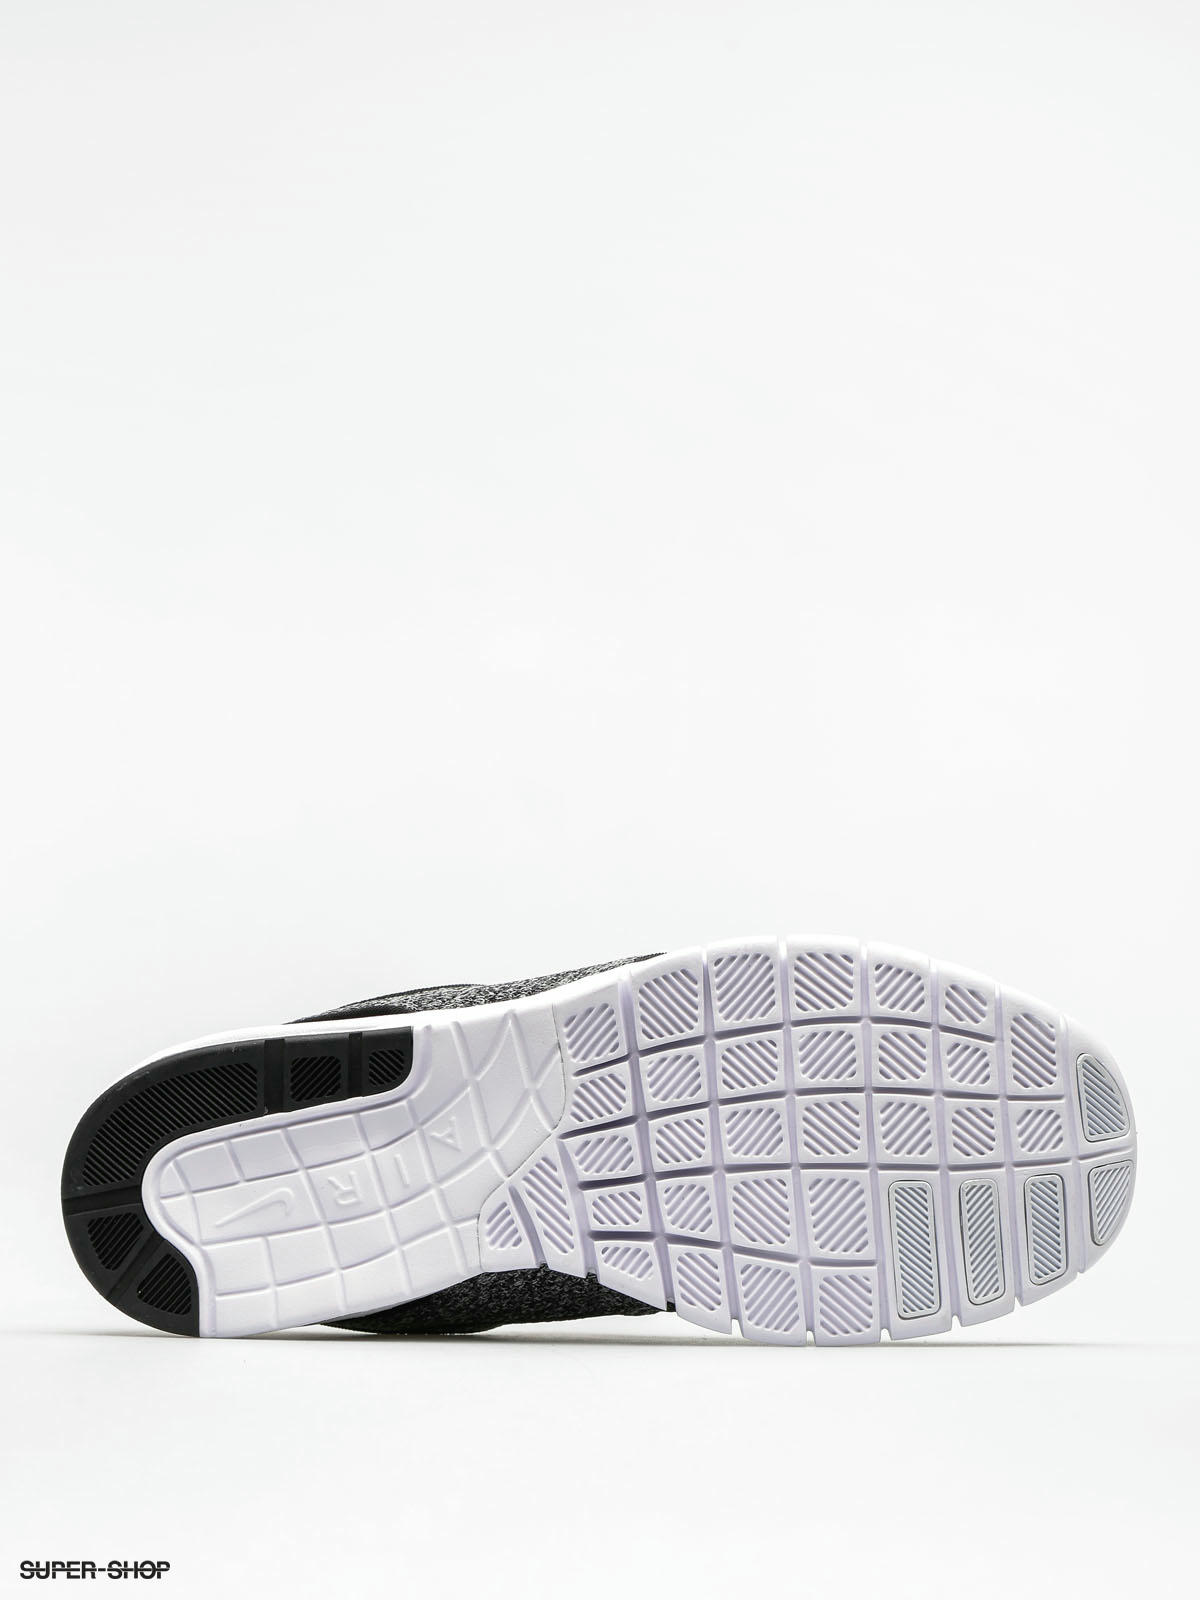 sb stefan janoski max shoes (white black dark grey)